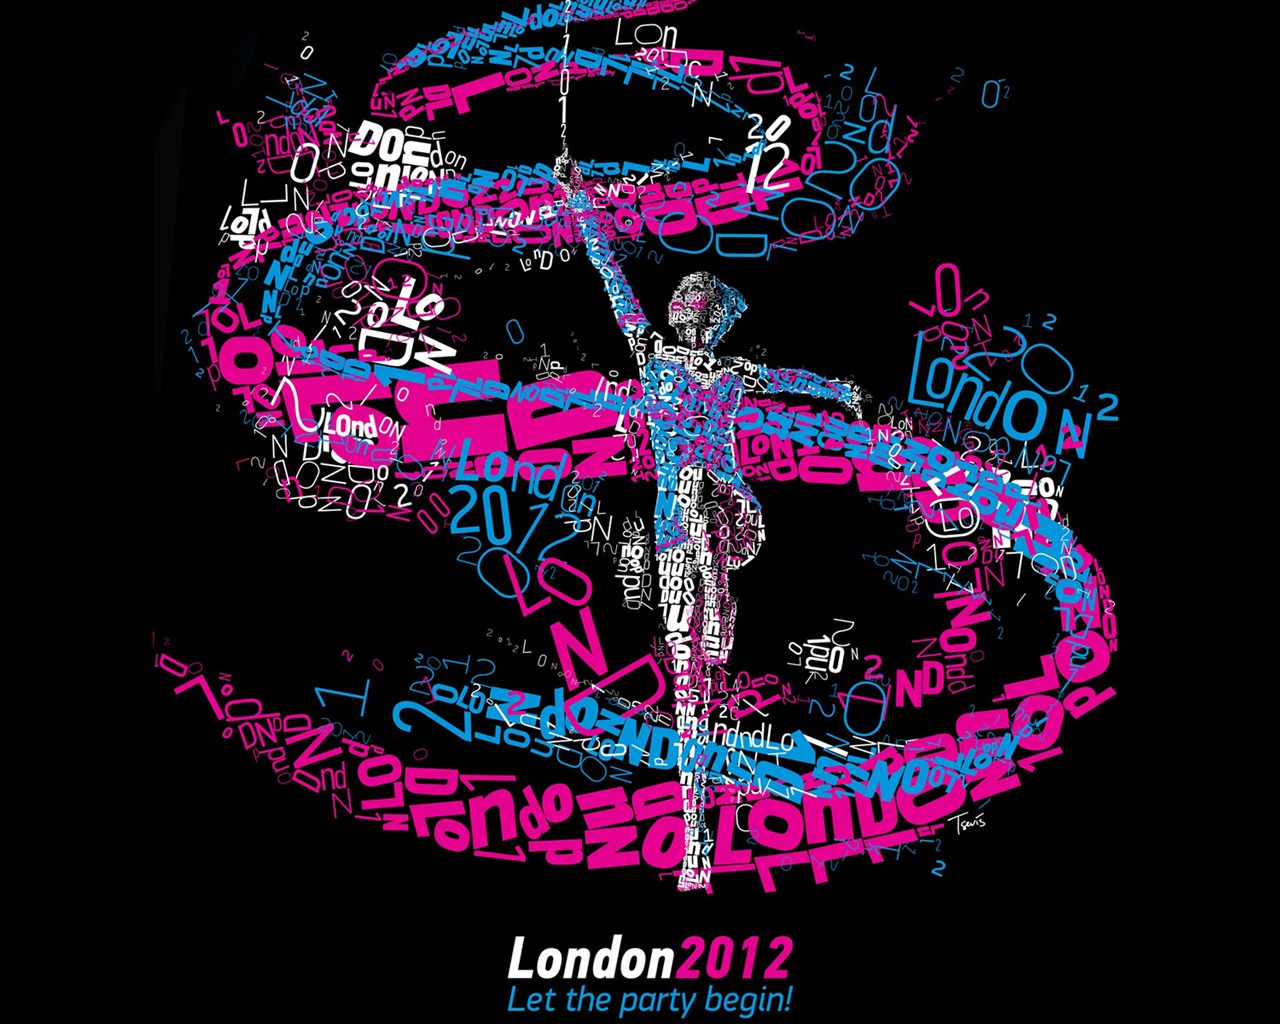 London 2012 Olympics theme wallpapers (1) #23 - 1280x1024